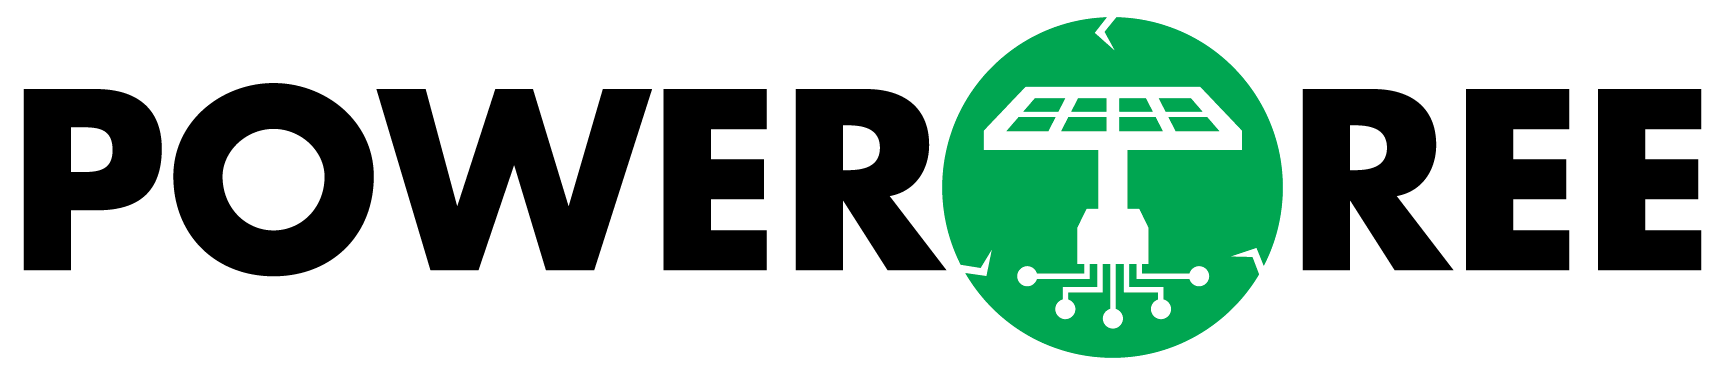 Powertree Logo